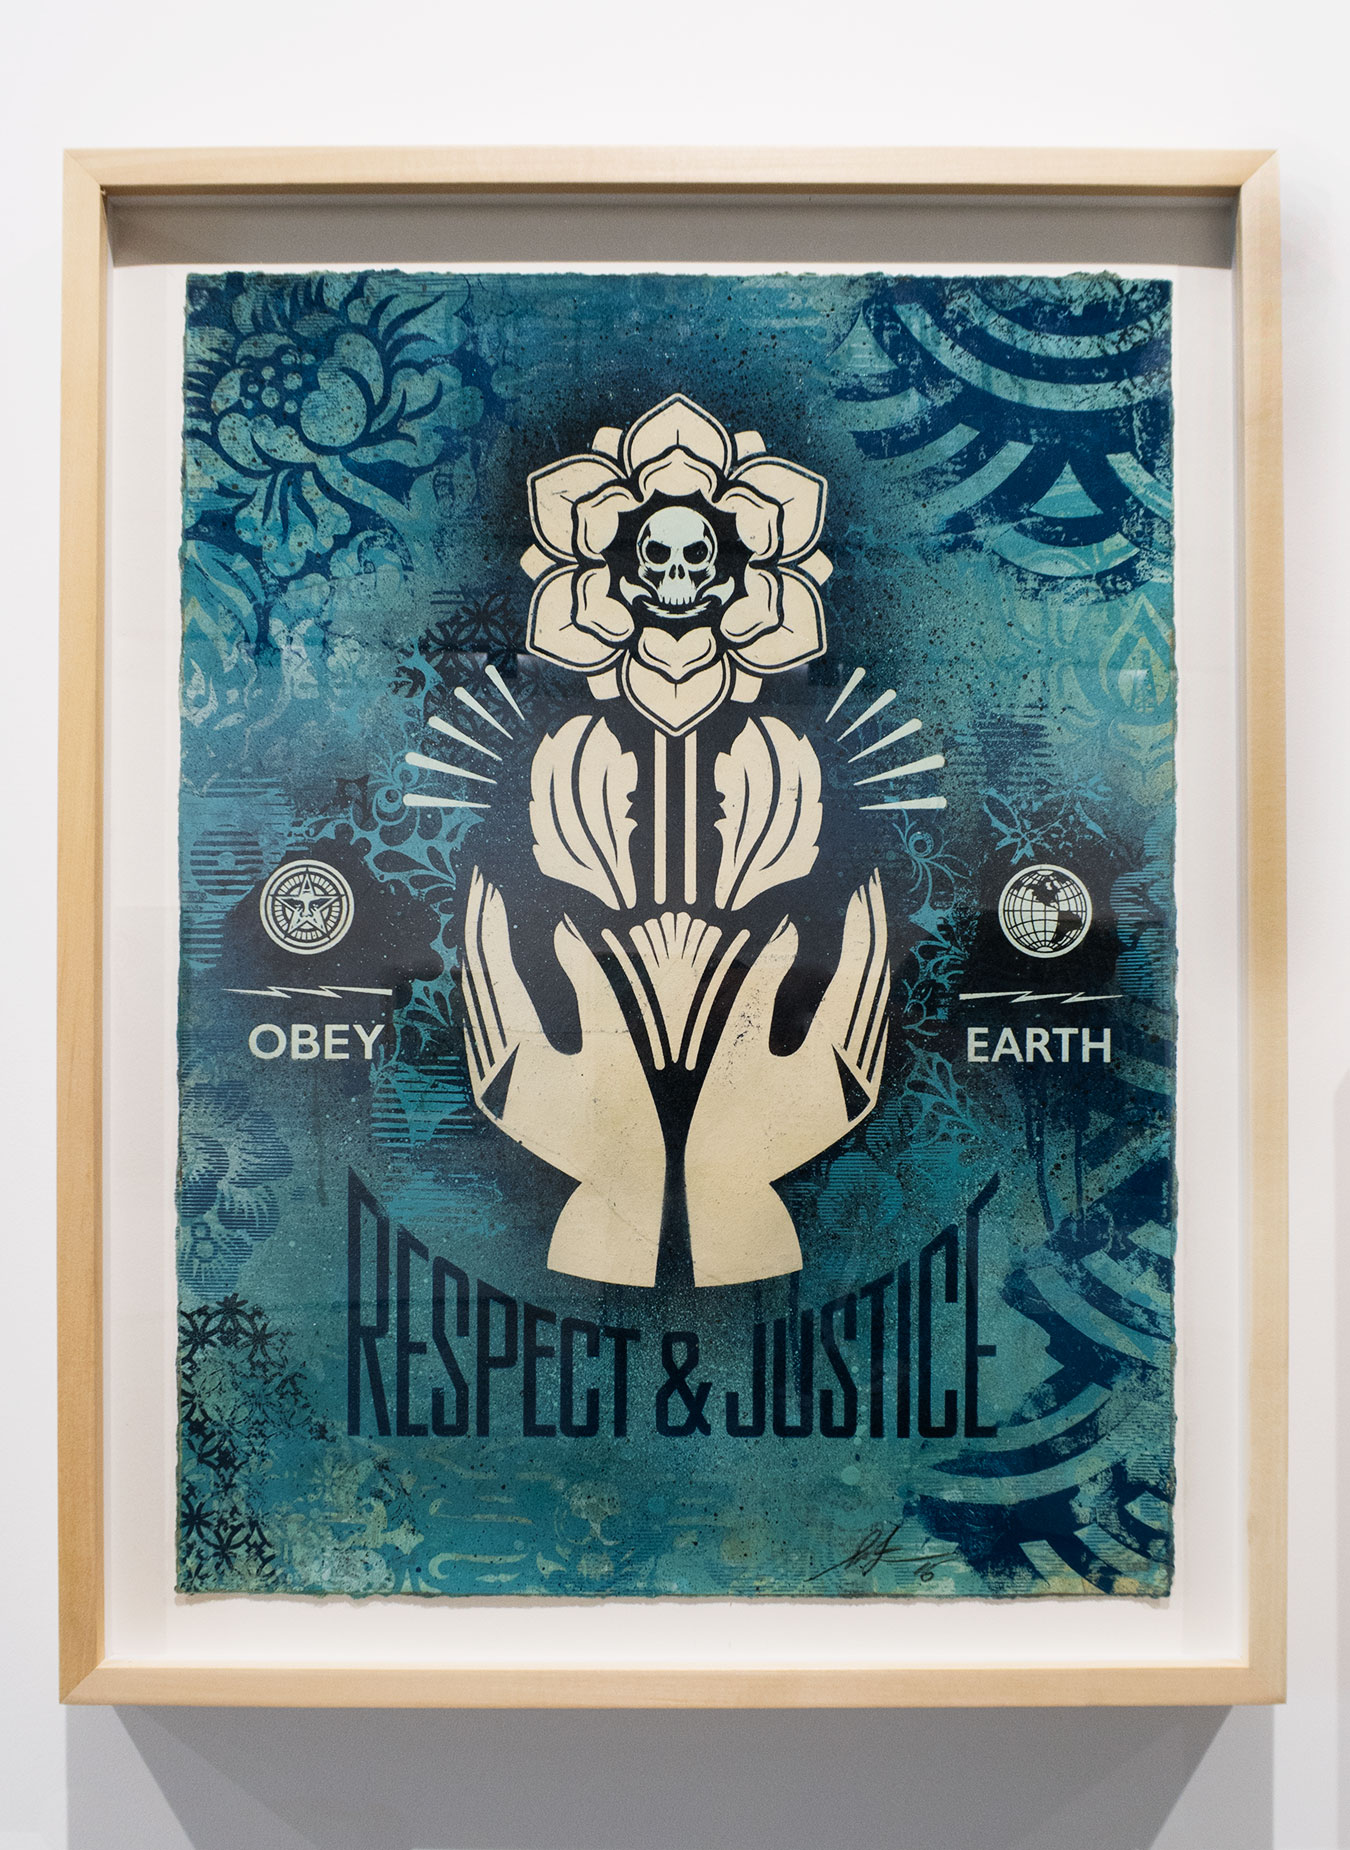 Respect & Justice / Earth Crisis Exhibition / Shepard Fairey 2016